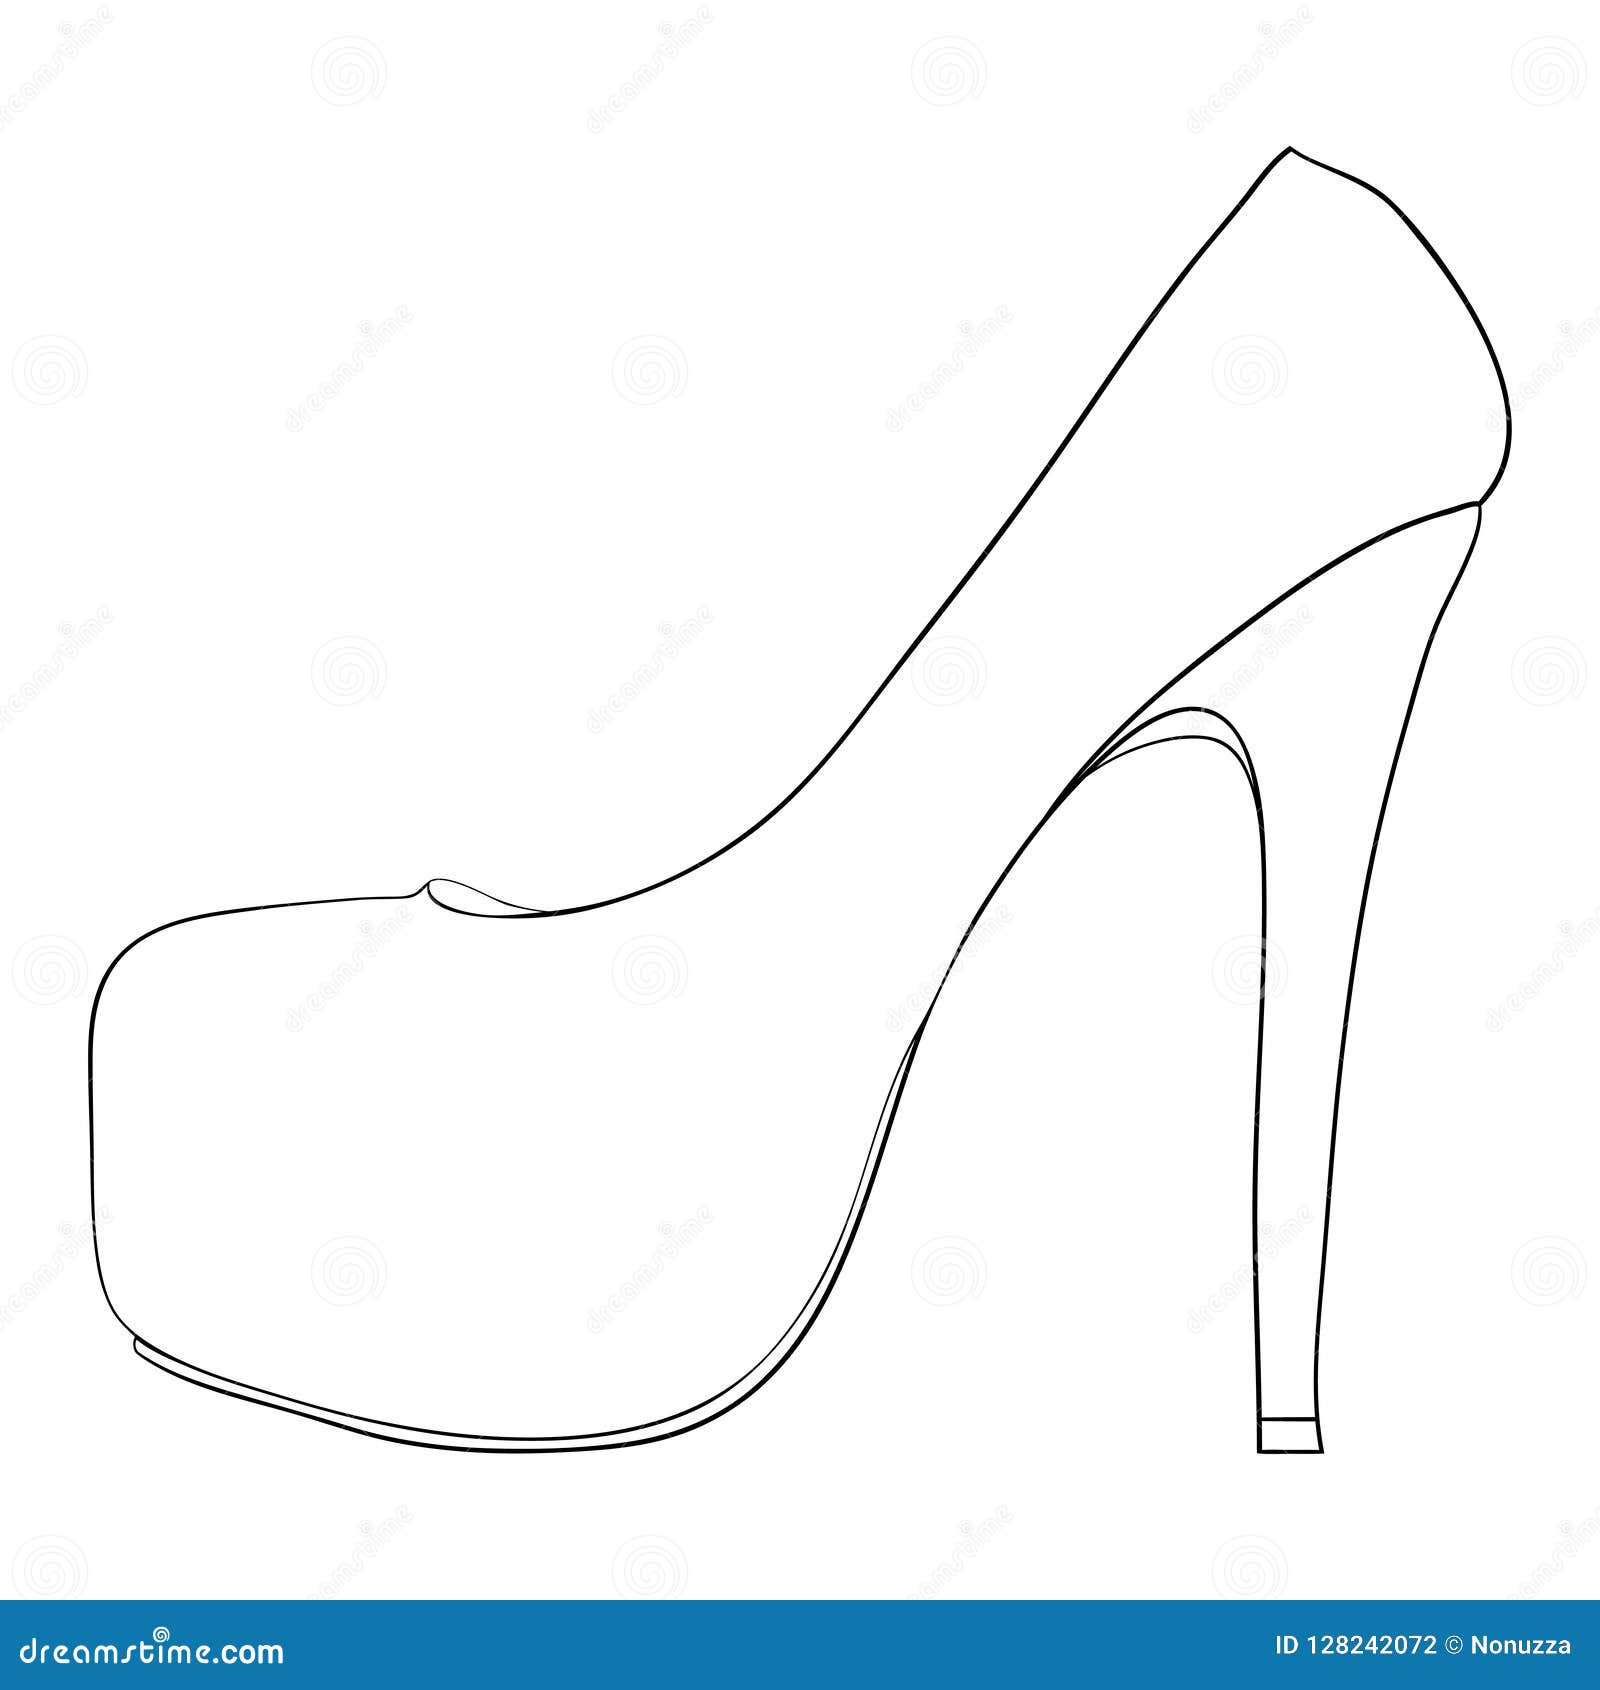 Product Image | Drawing high heels, Fashion flats, Fashion shoes